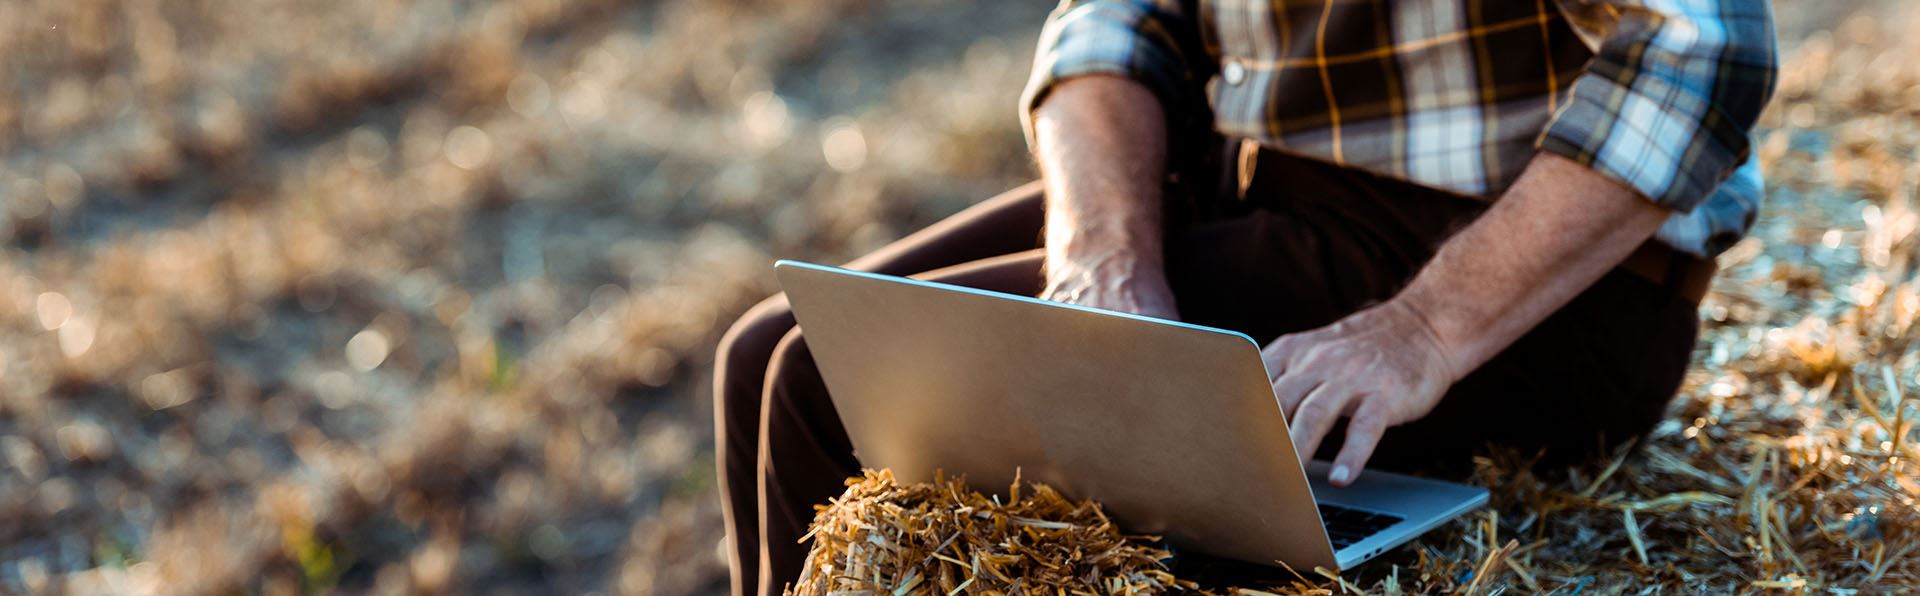 man sitting on haybale working on laptop